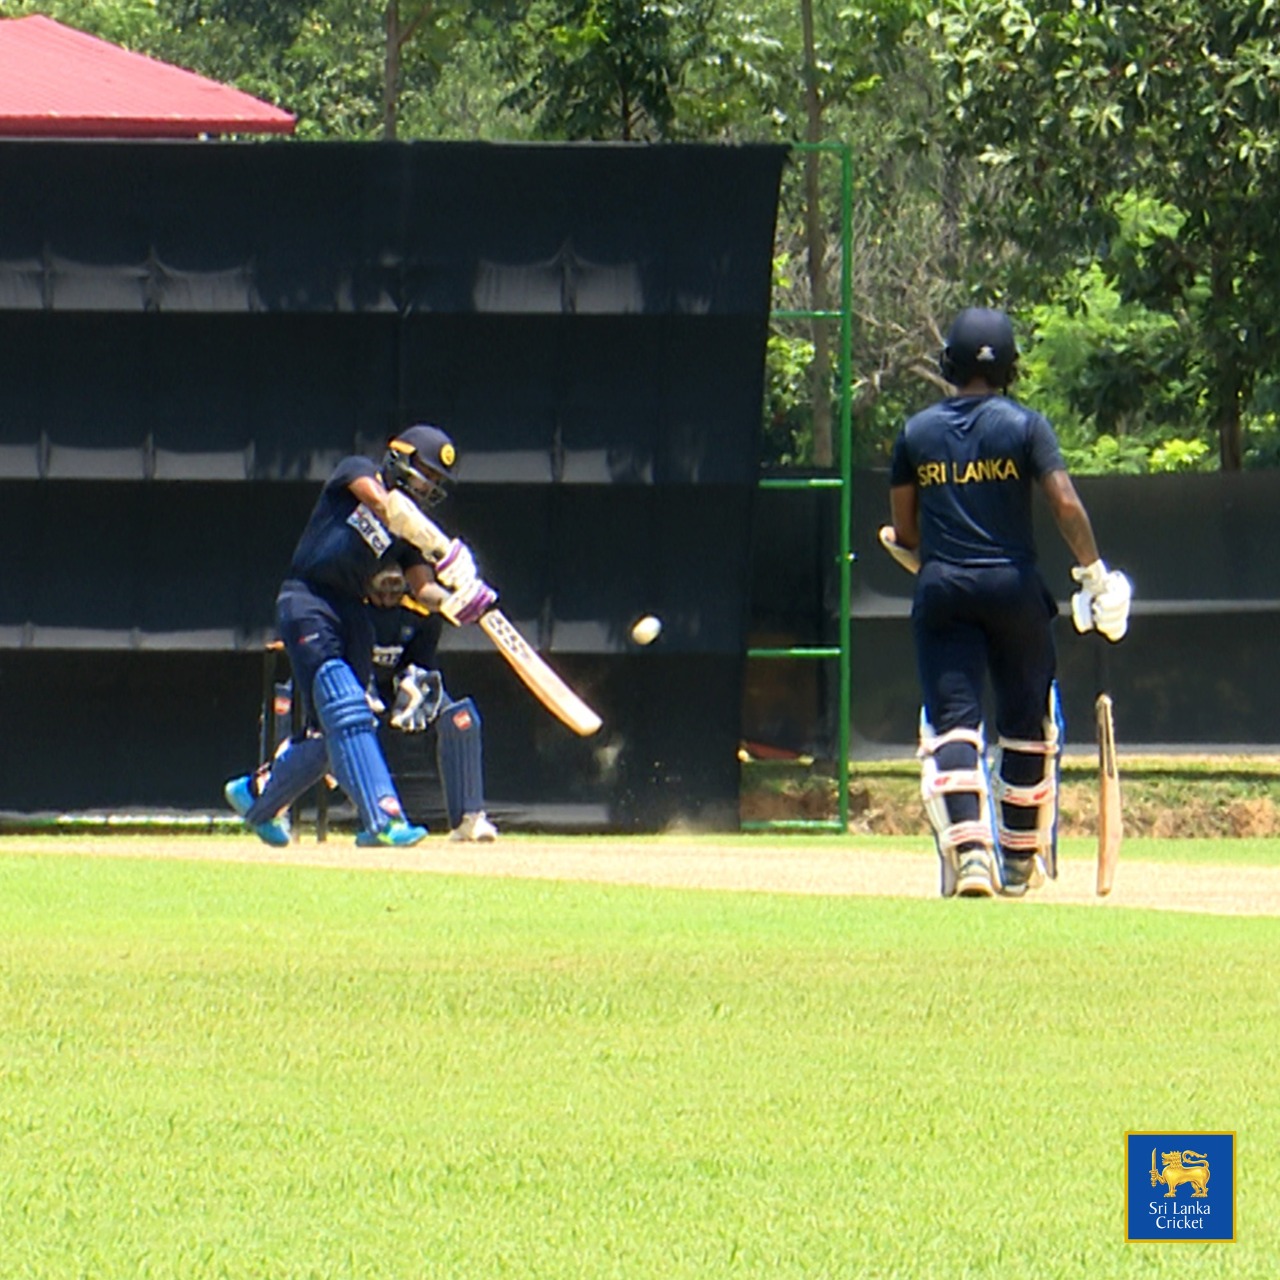 Practice Match | Sri Lanka ODI Squad 40 over Match at BKSP Ground 3, Savar, Bangladesh